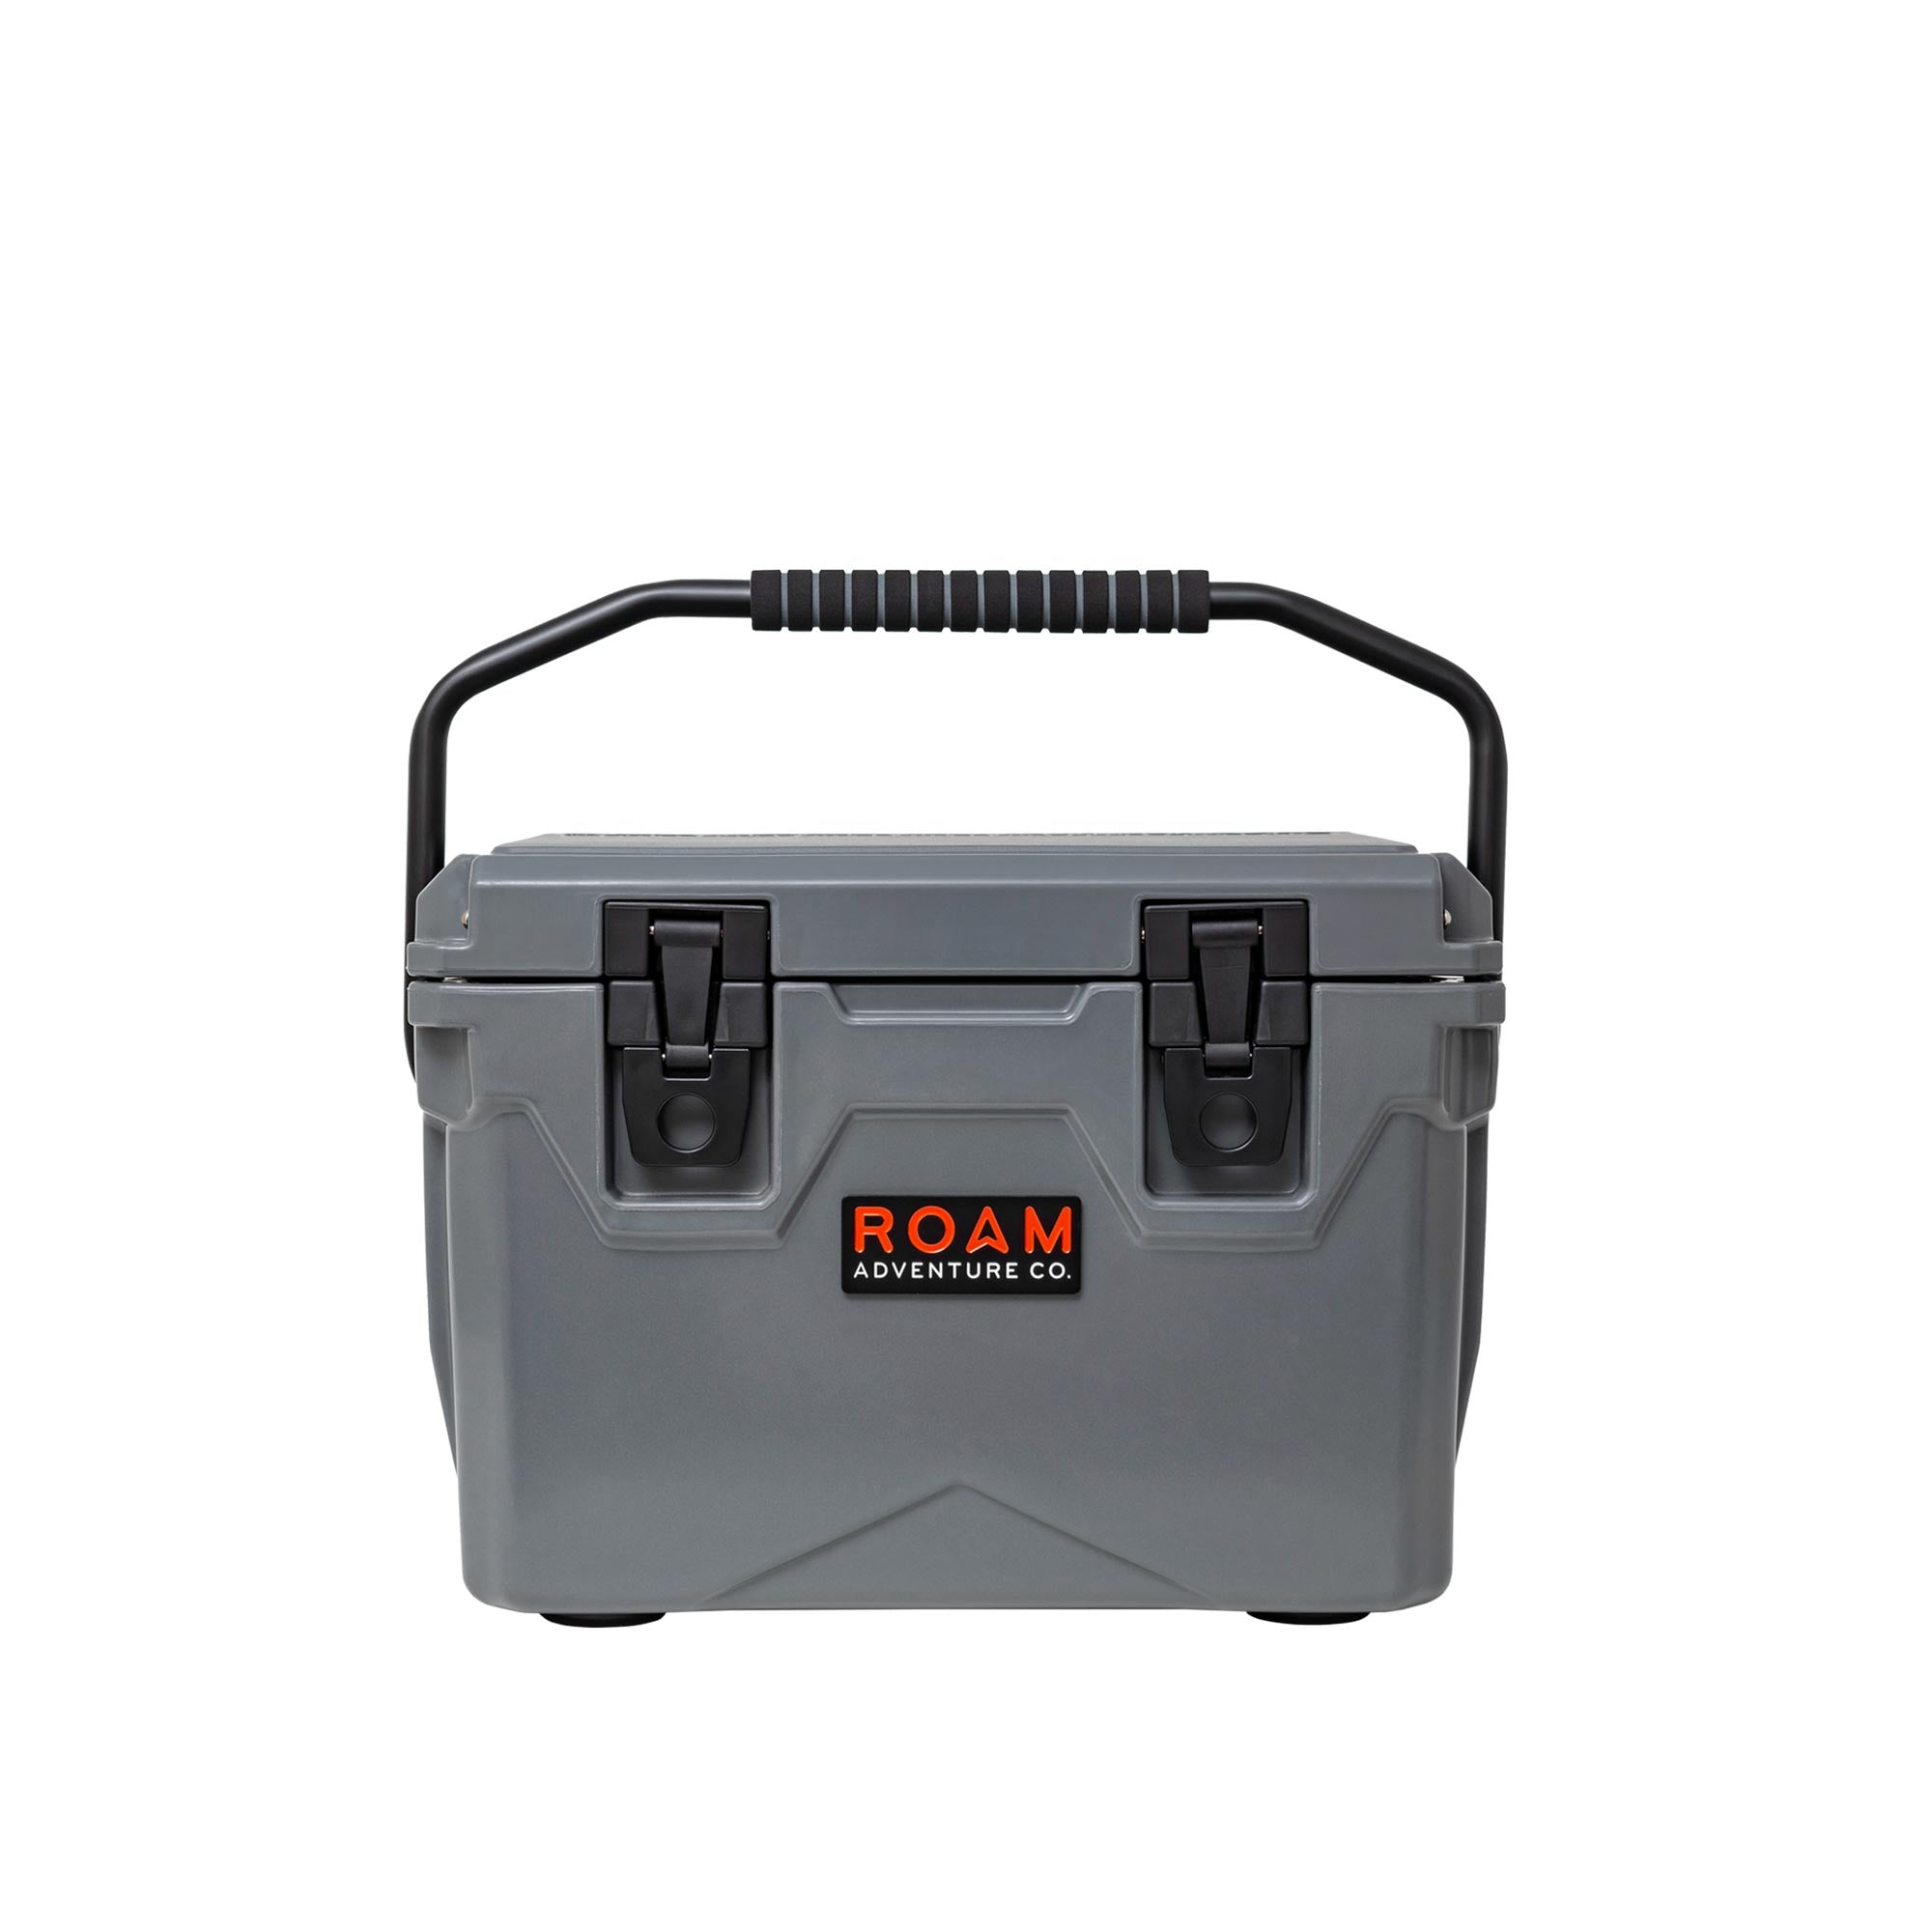 Roam Adventure Co. - 20Qt. Rugged Cooler